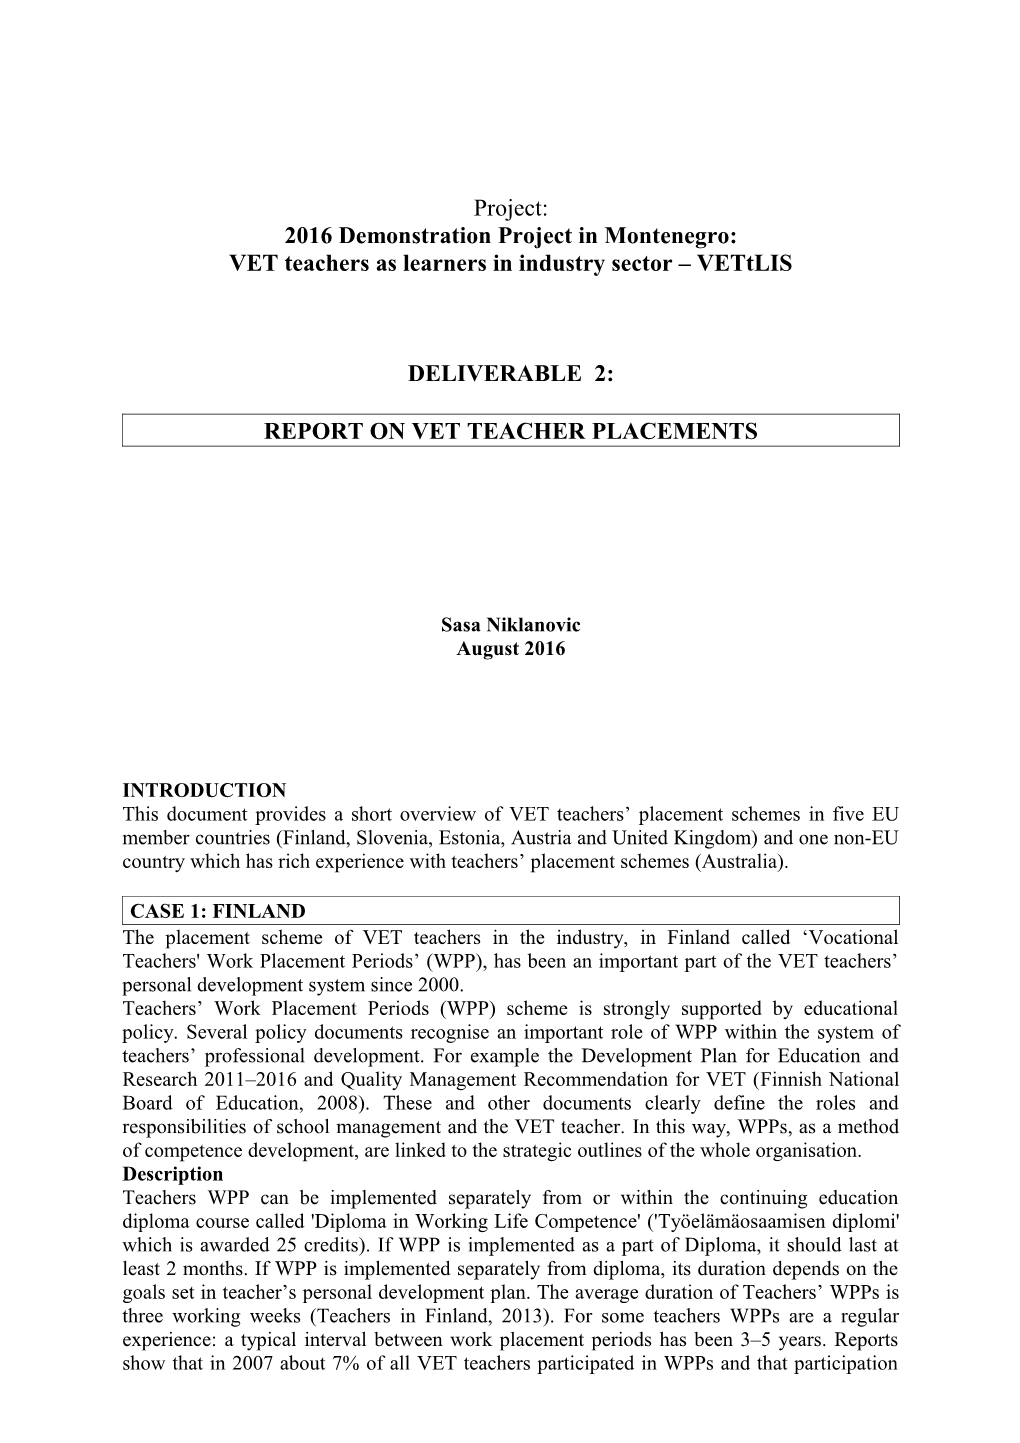 VET Teachers As Learners in Industry Sector Vettlis